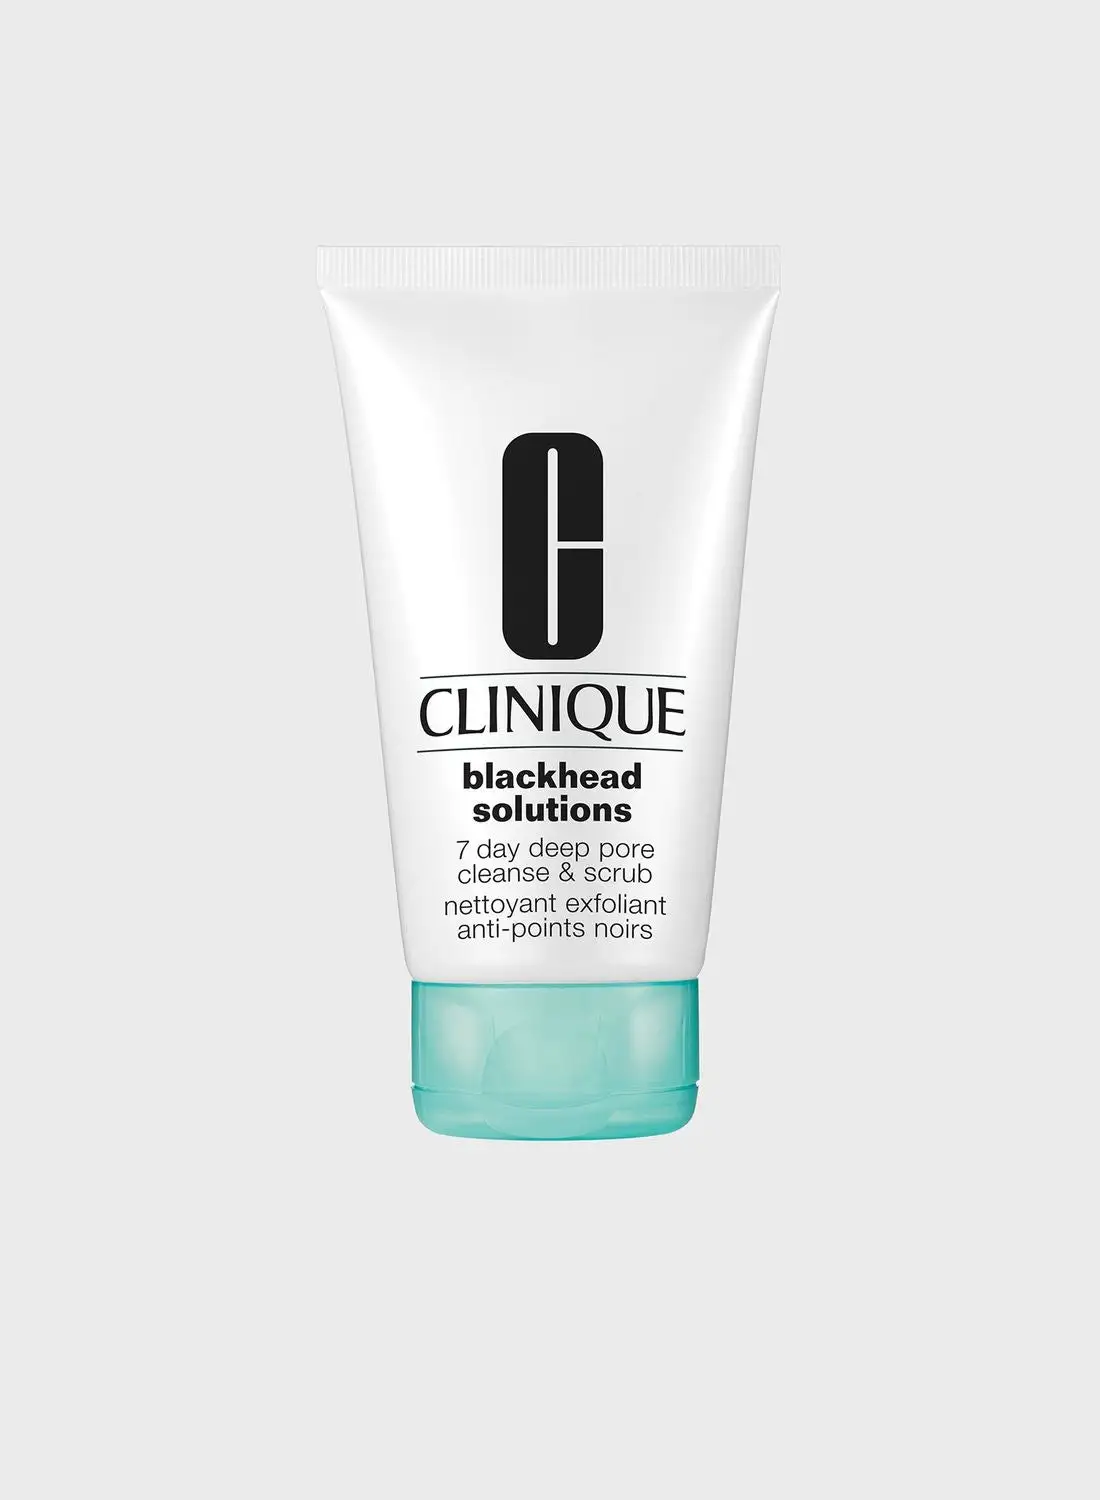 CLINIQUE Blackhead Solutions 7 Day Deep Pore Scrub